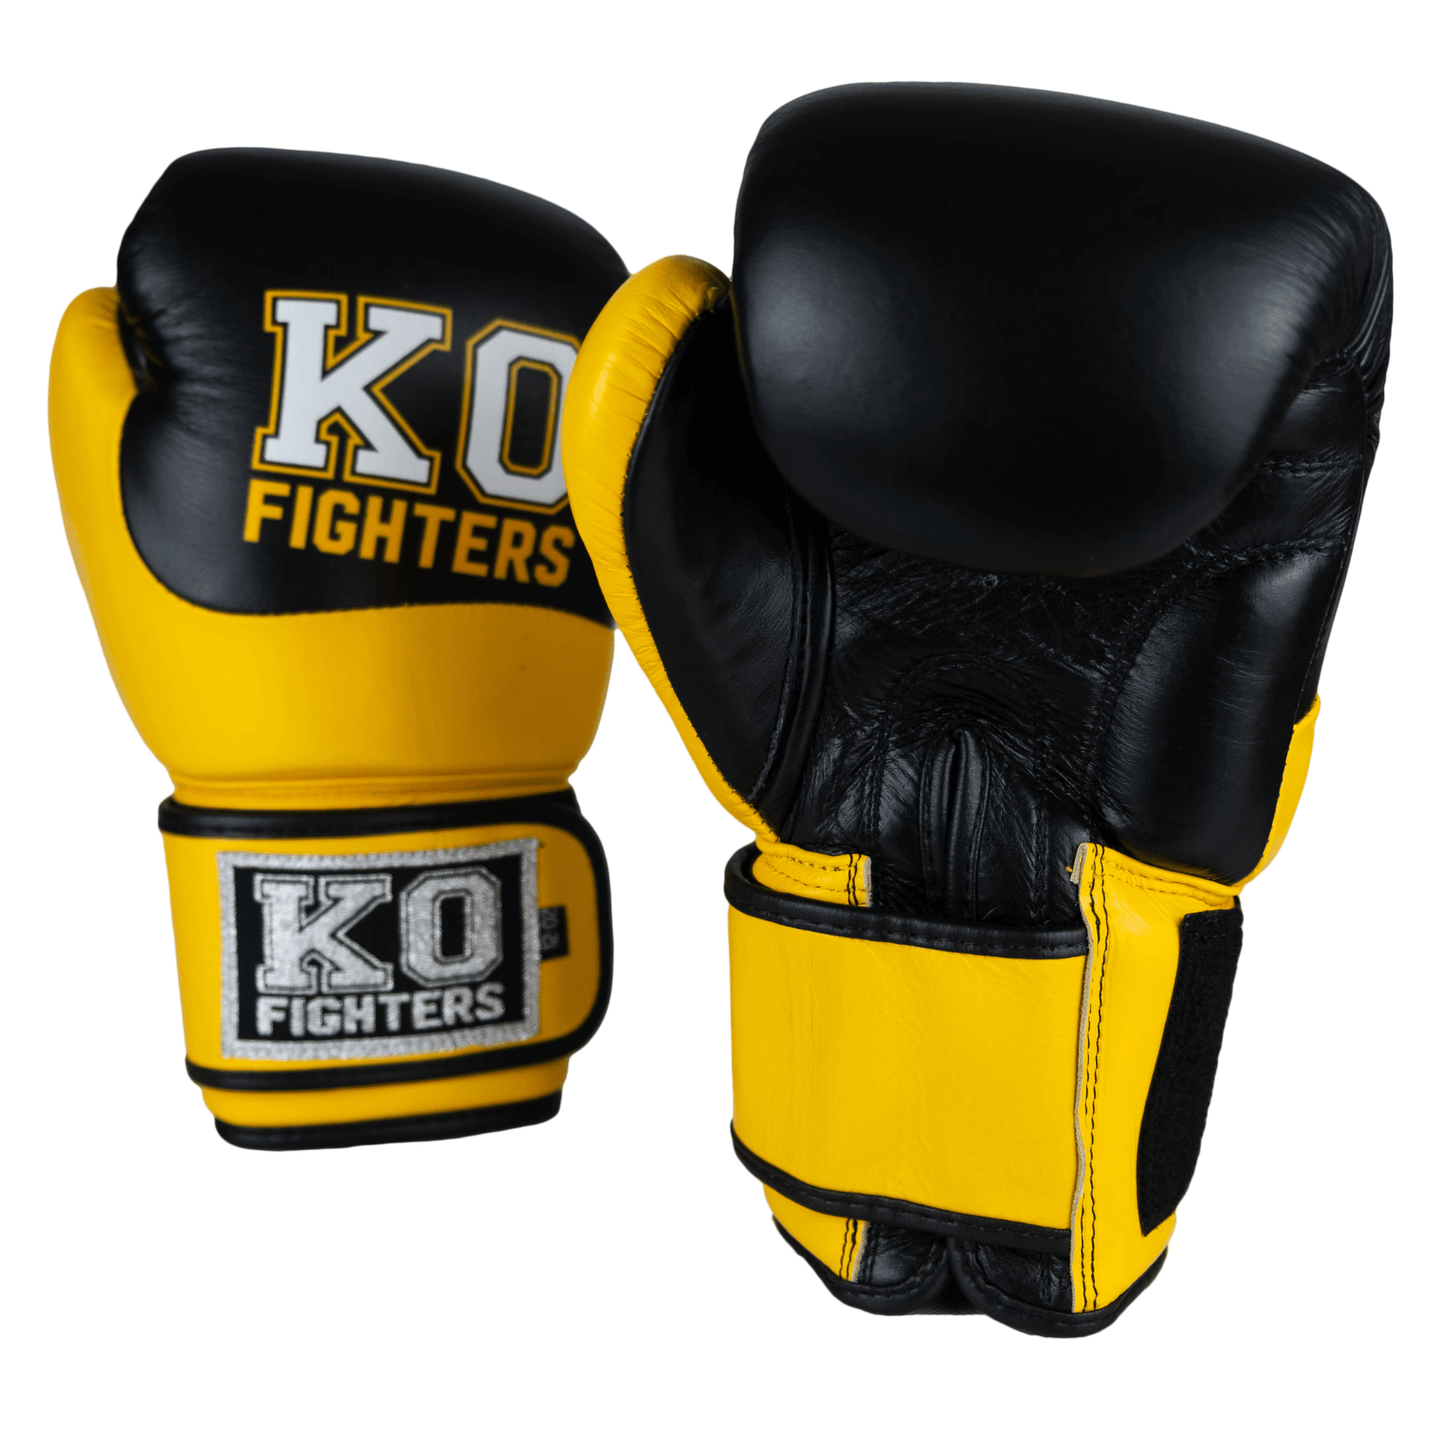 (Kick) Boxing gloves Lightning Jab Yellow